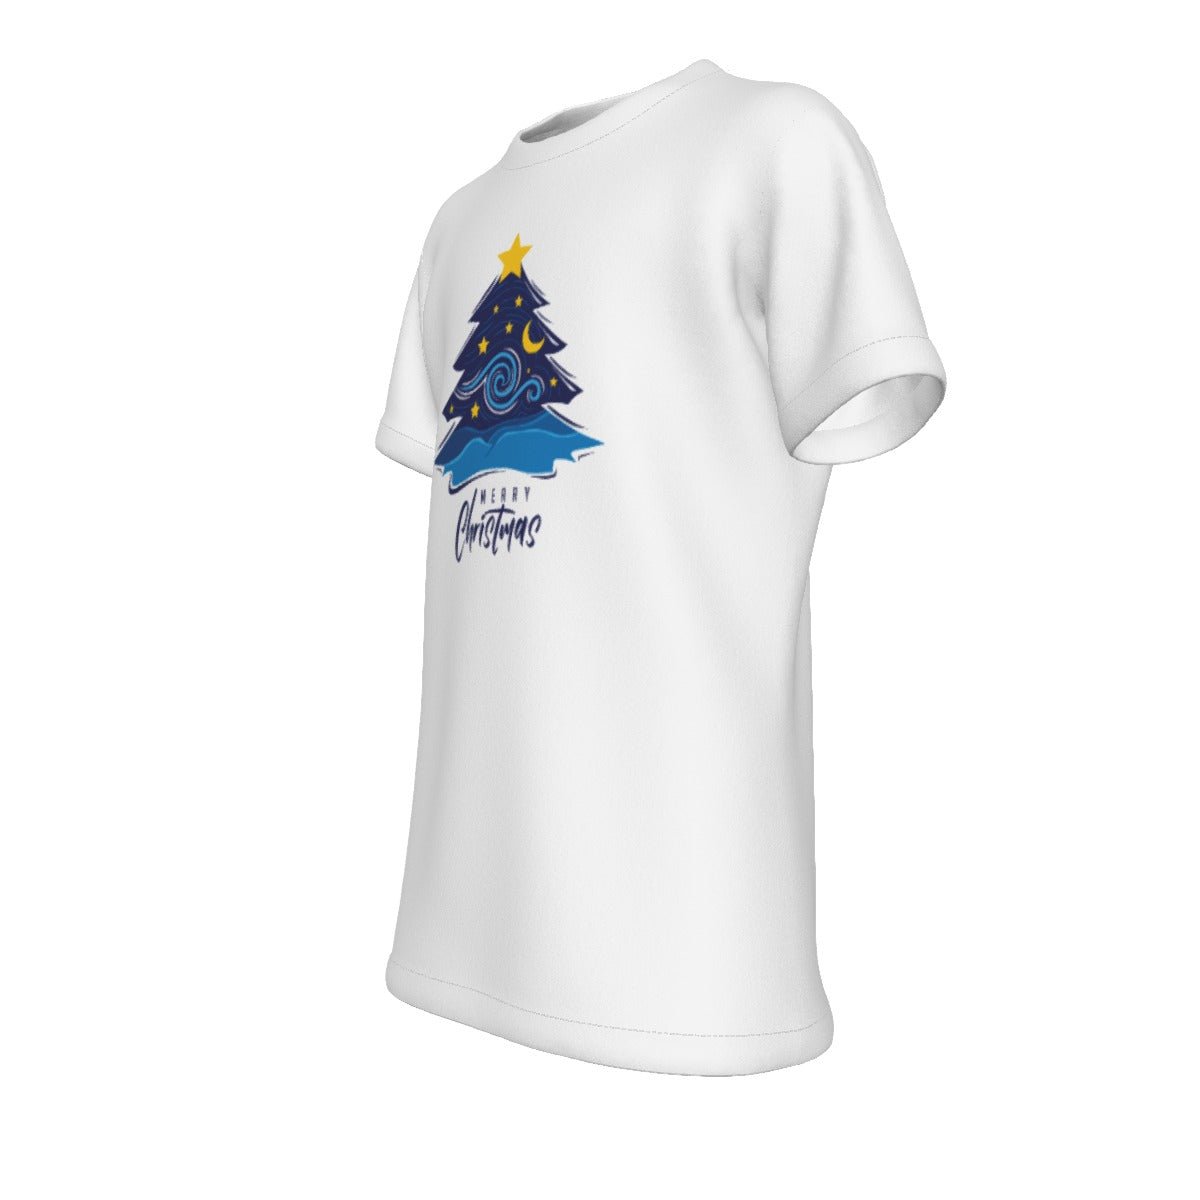 Kid's Christmas T-Shirt - Merry Christmas - Blue Tree - Festive Style